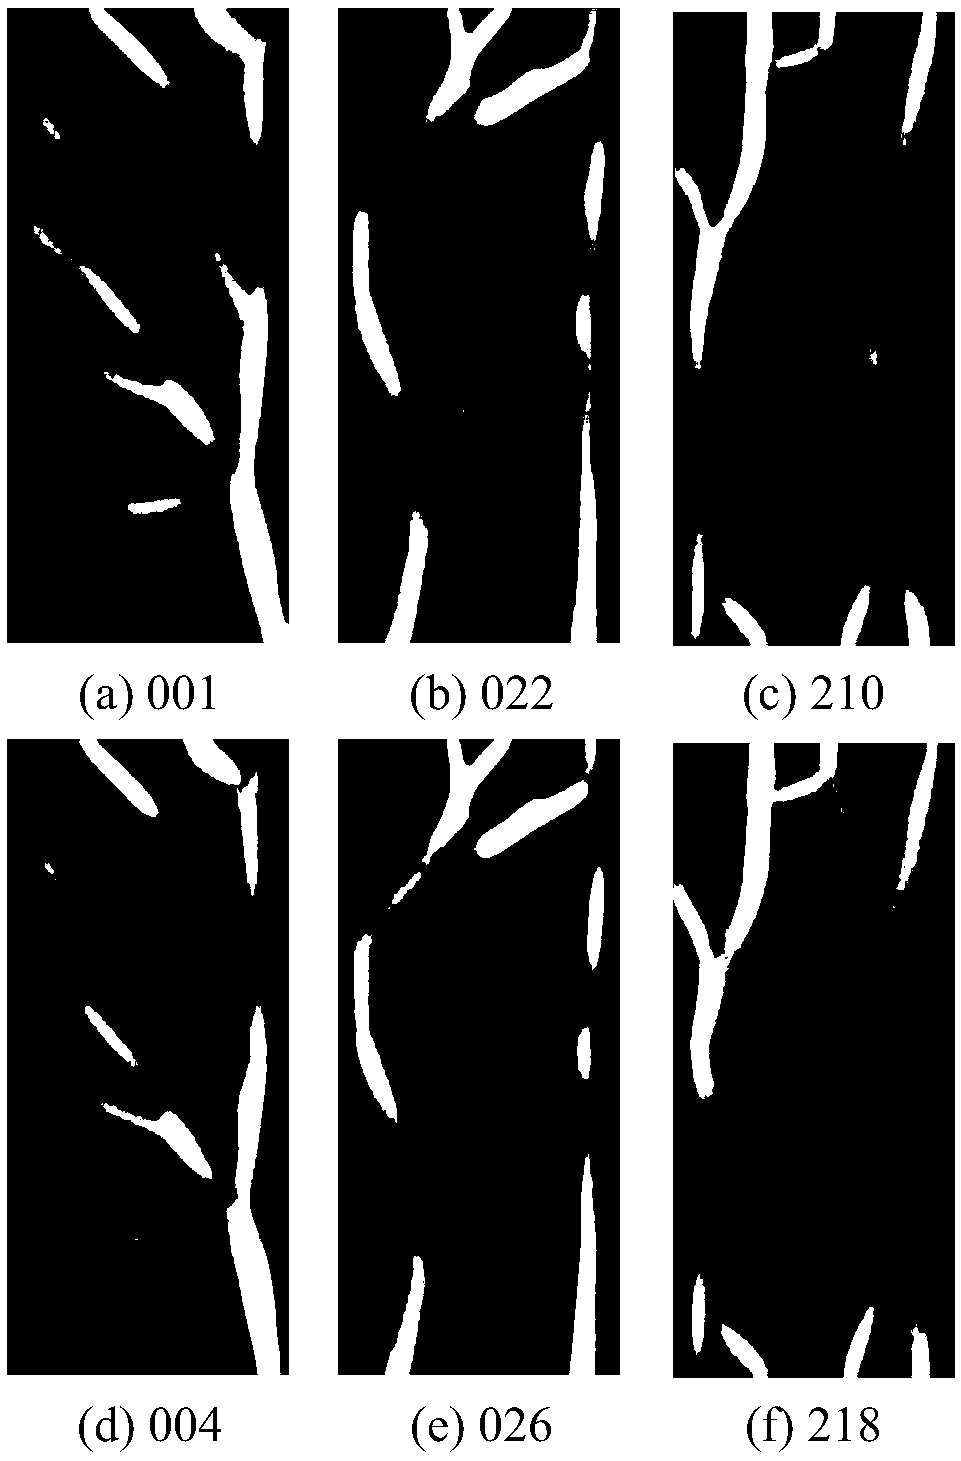 Vascular network restoration method based on a finger vein image